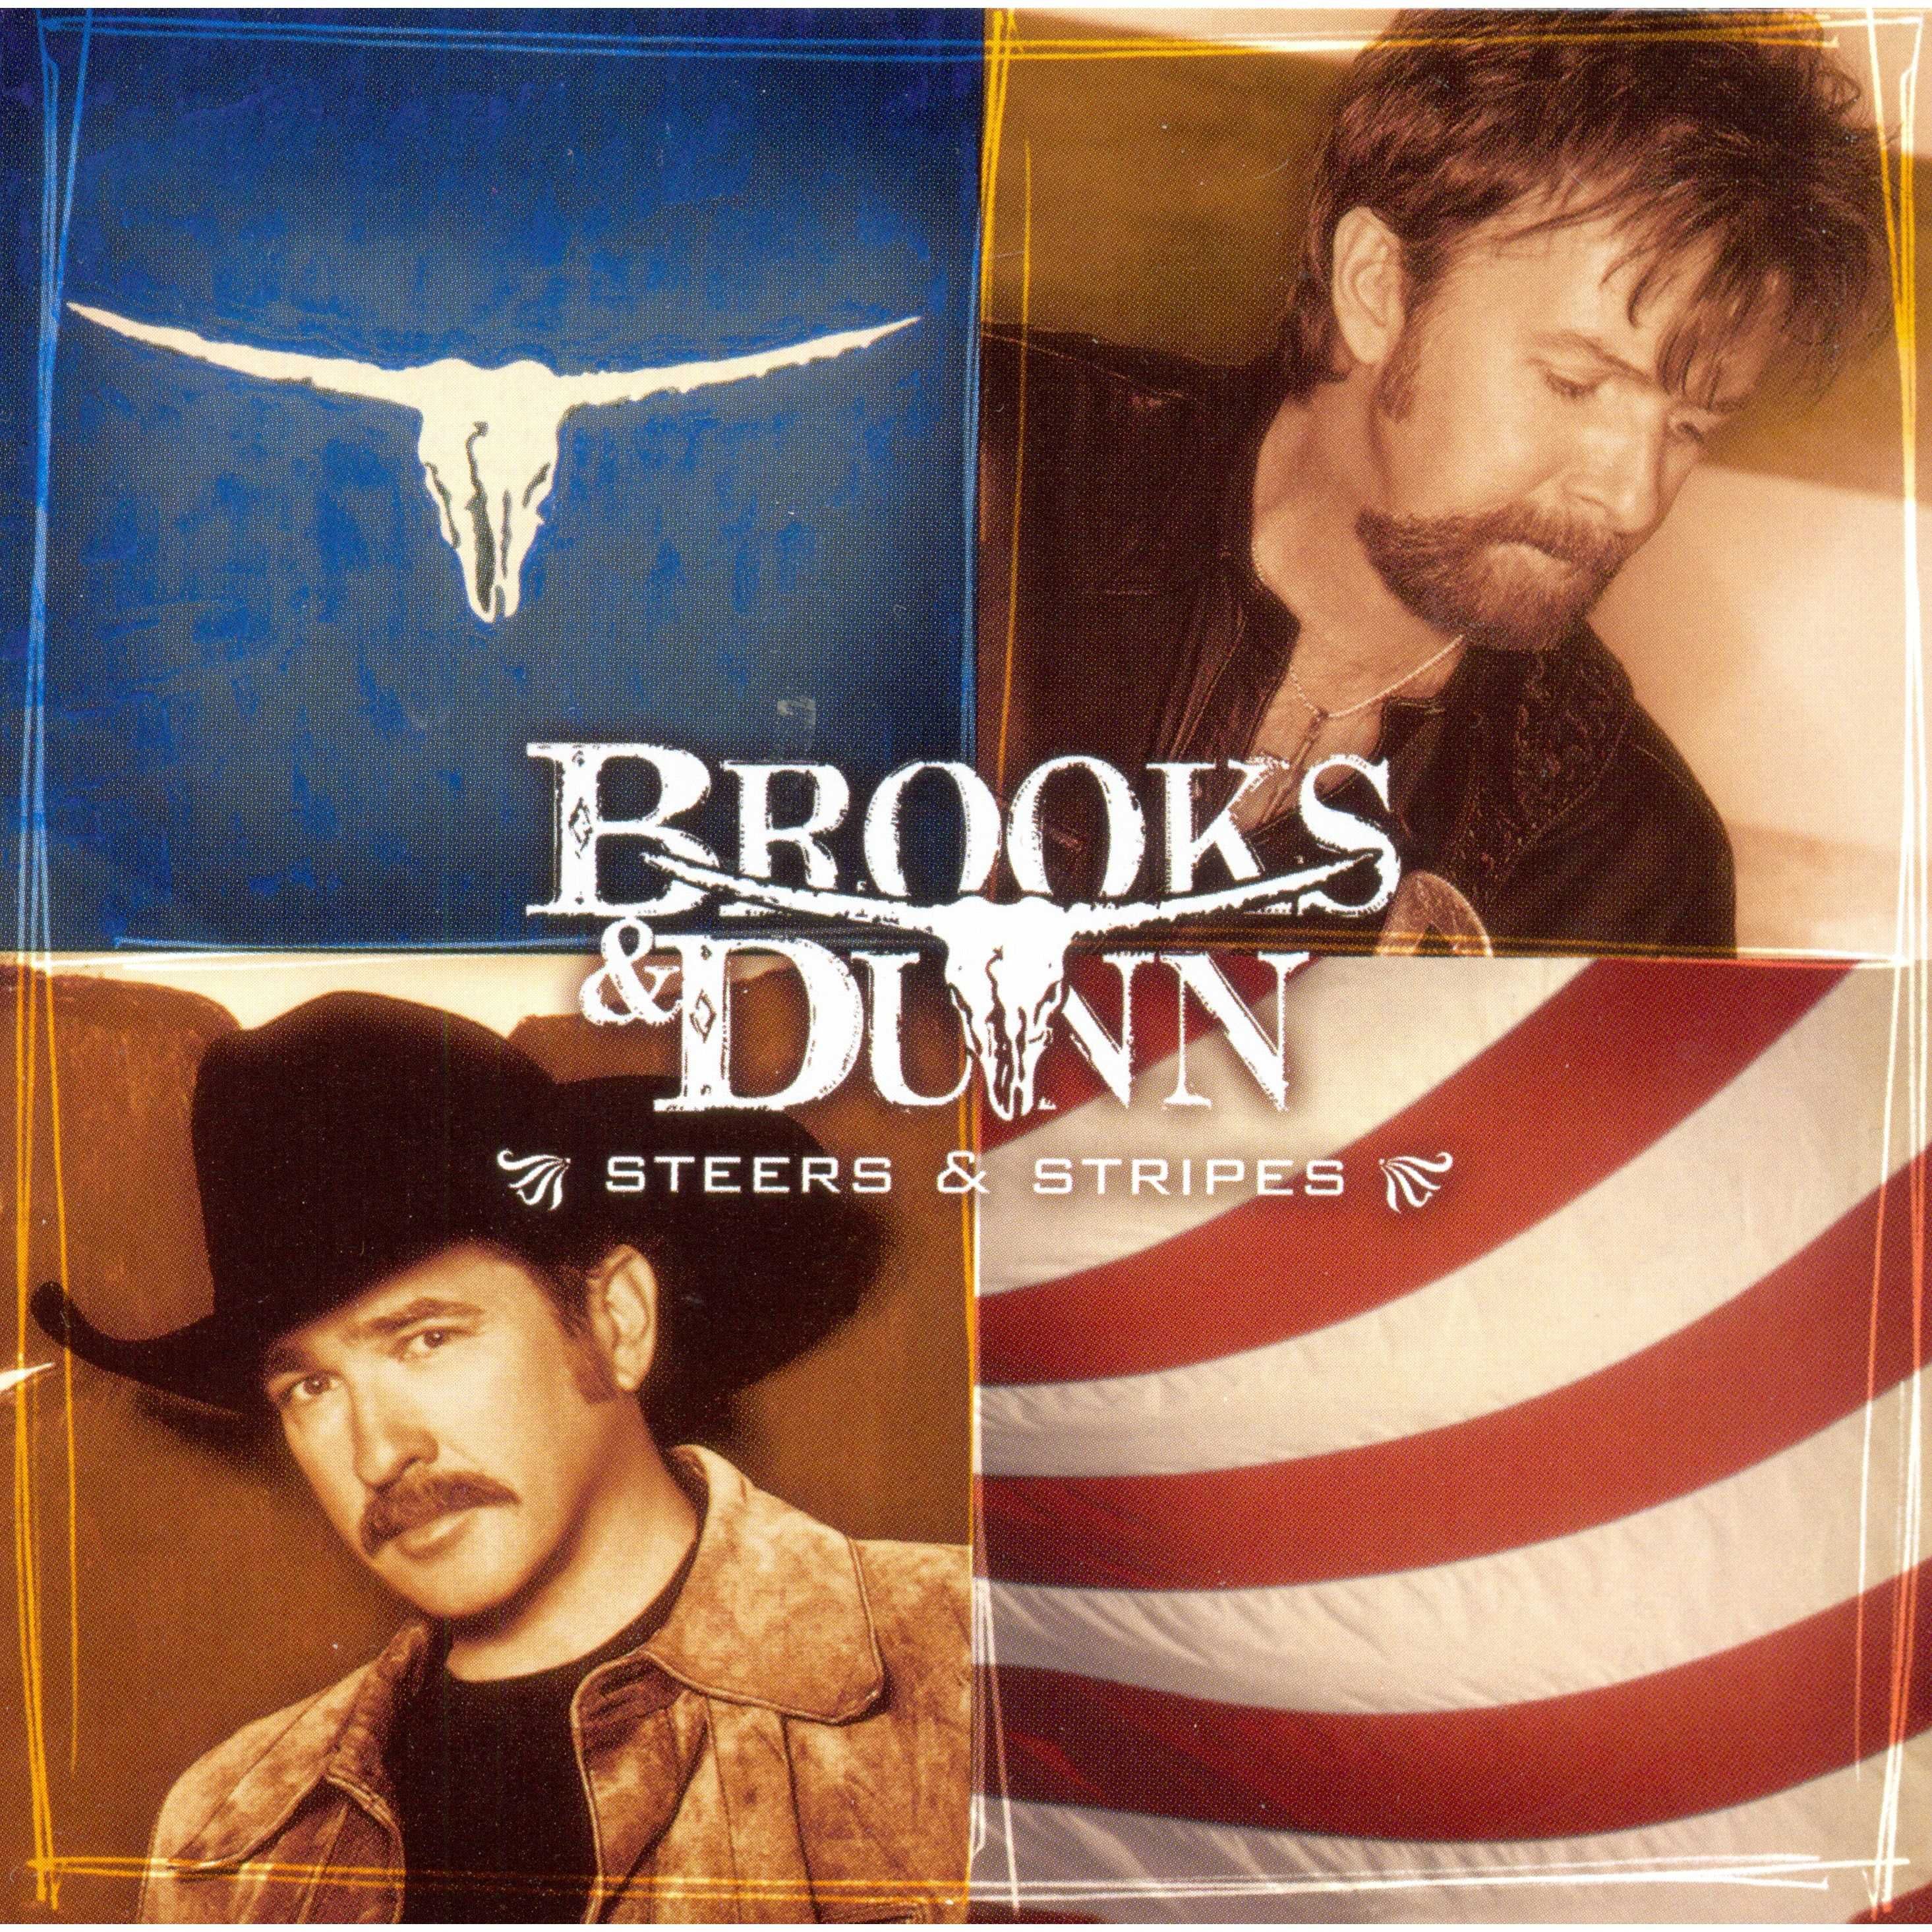 Brooks & Dunn "Steers & Dunn"